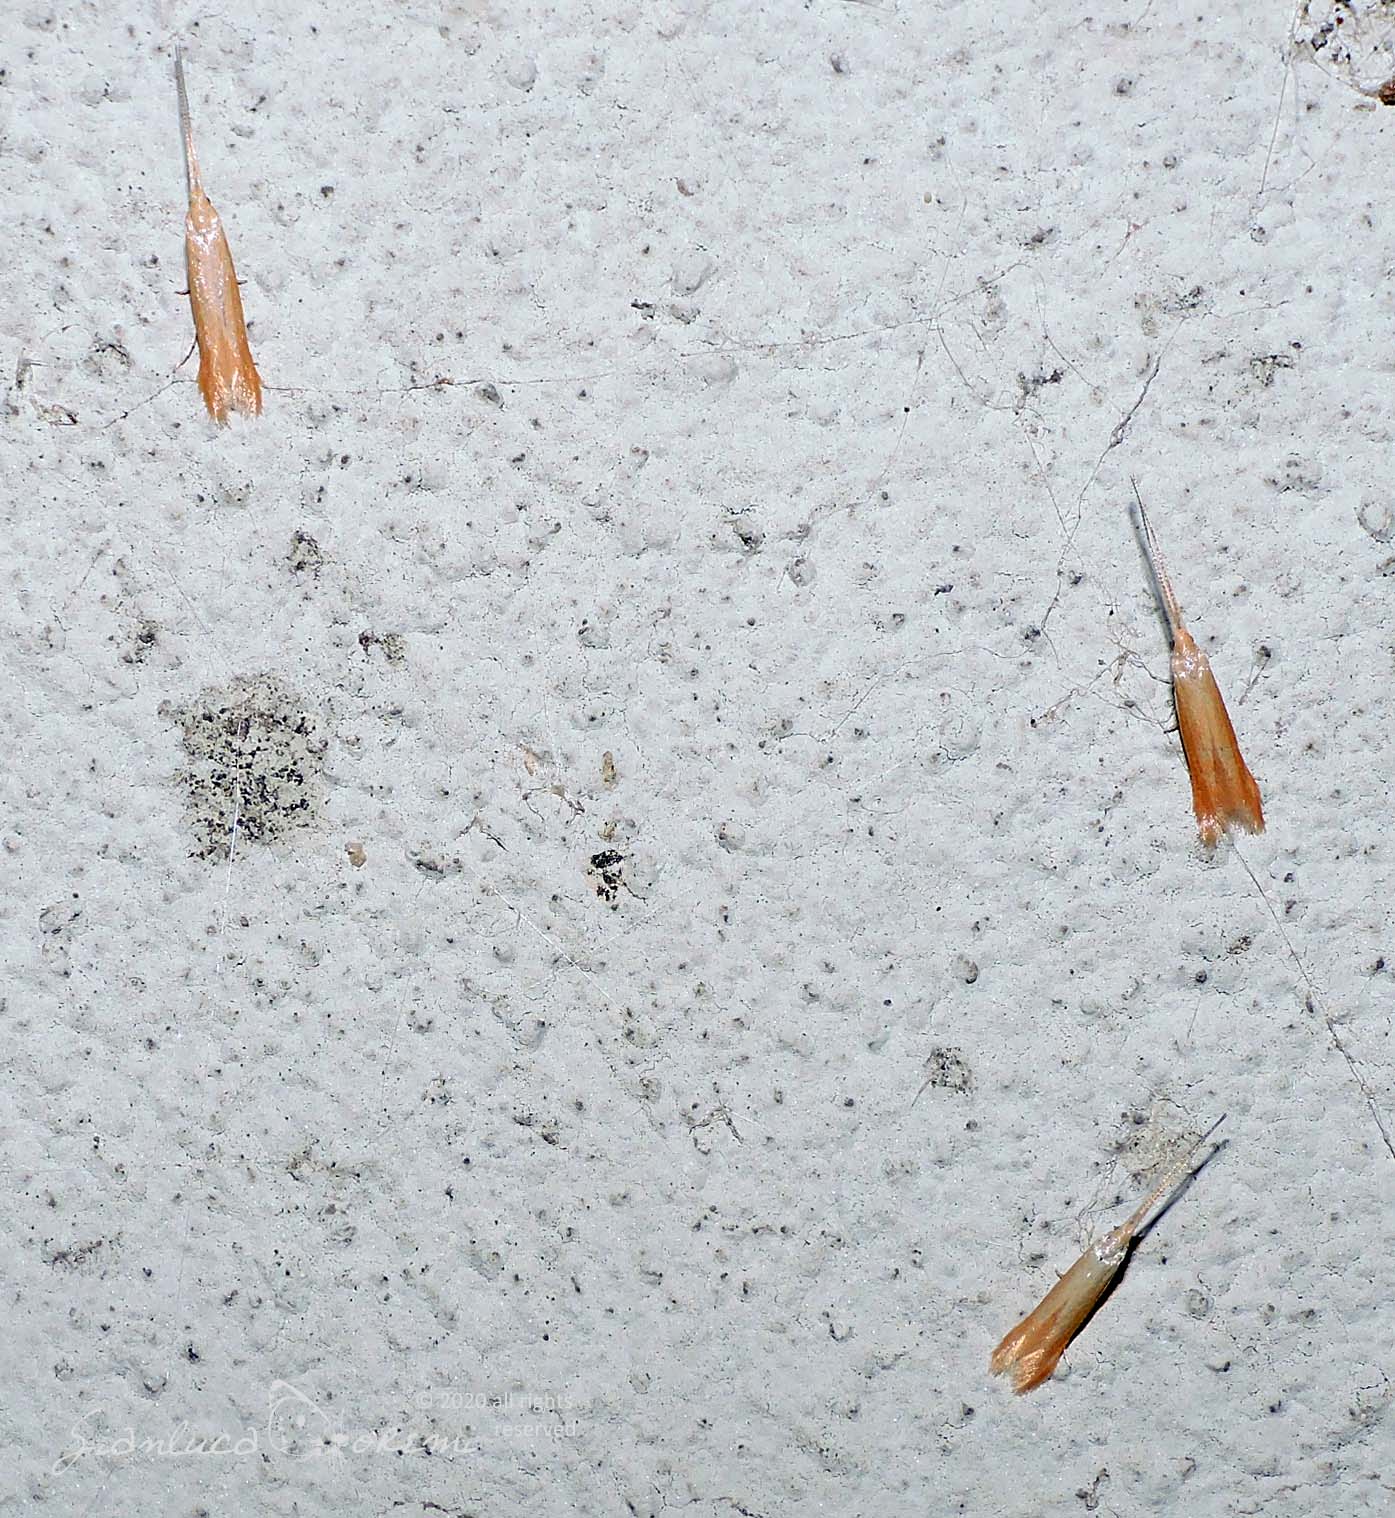 Coleophora cecidophorella